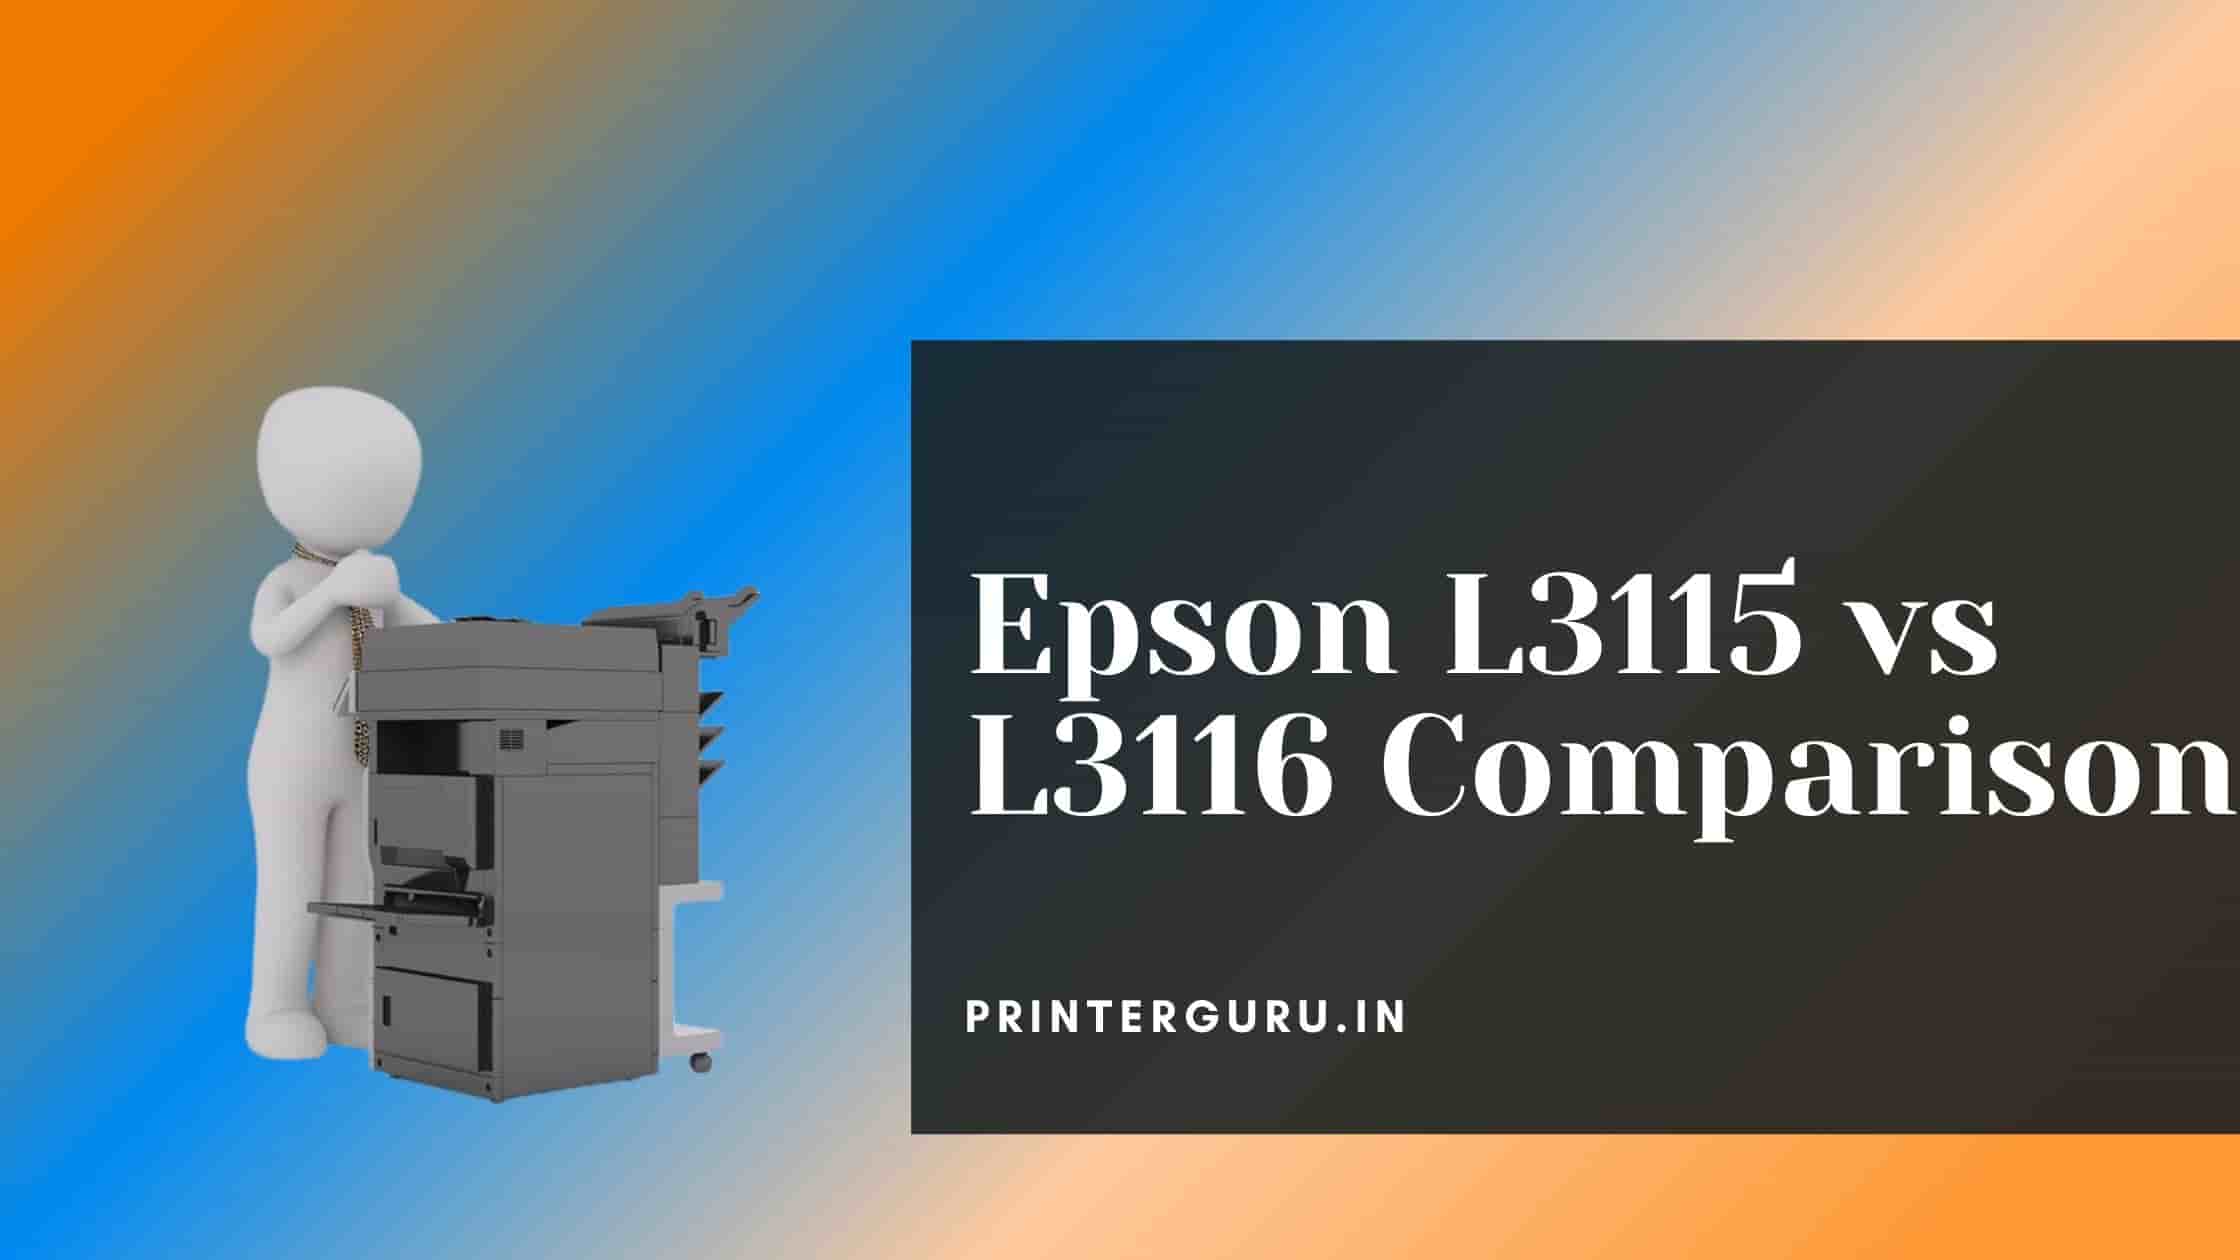 Epson L3115 vs L3116